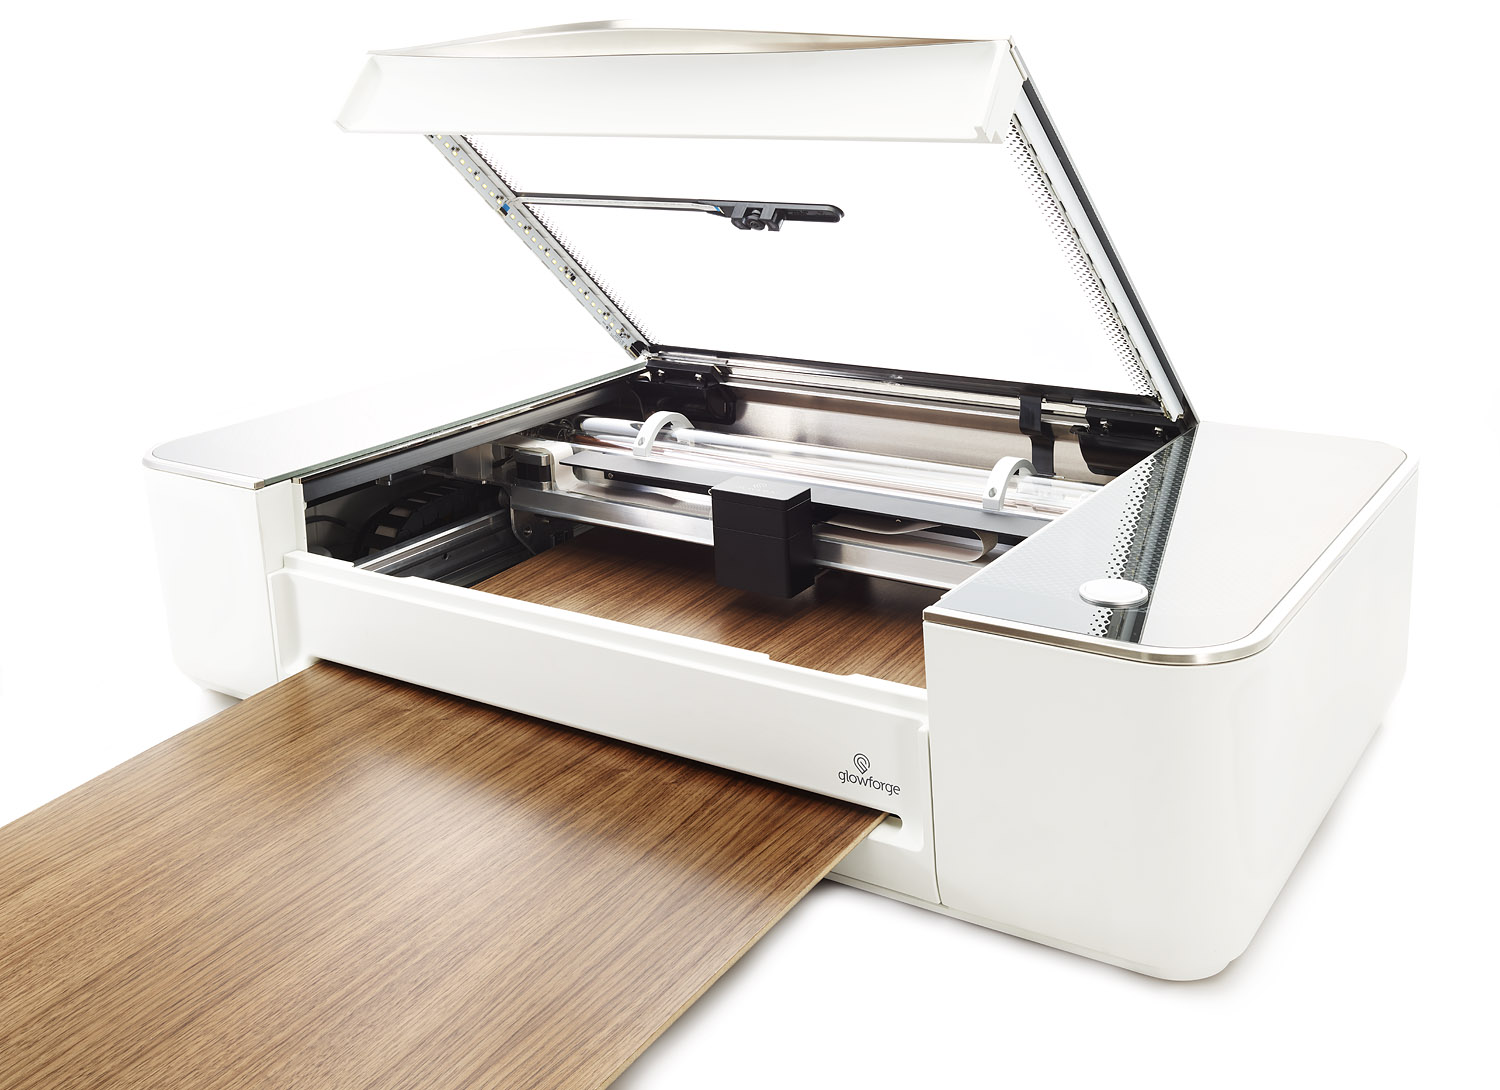 opens public orders for its desktop 3D laser cutter TechCrunch